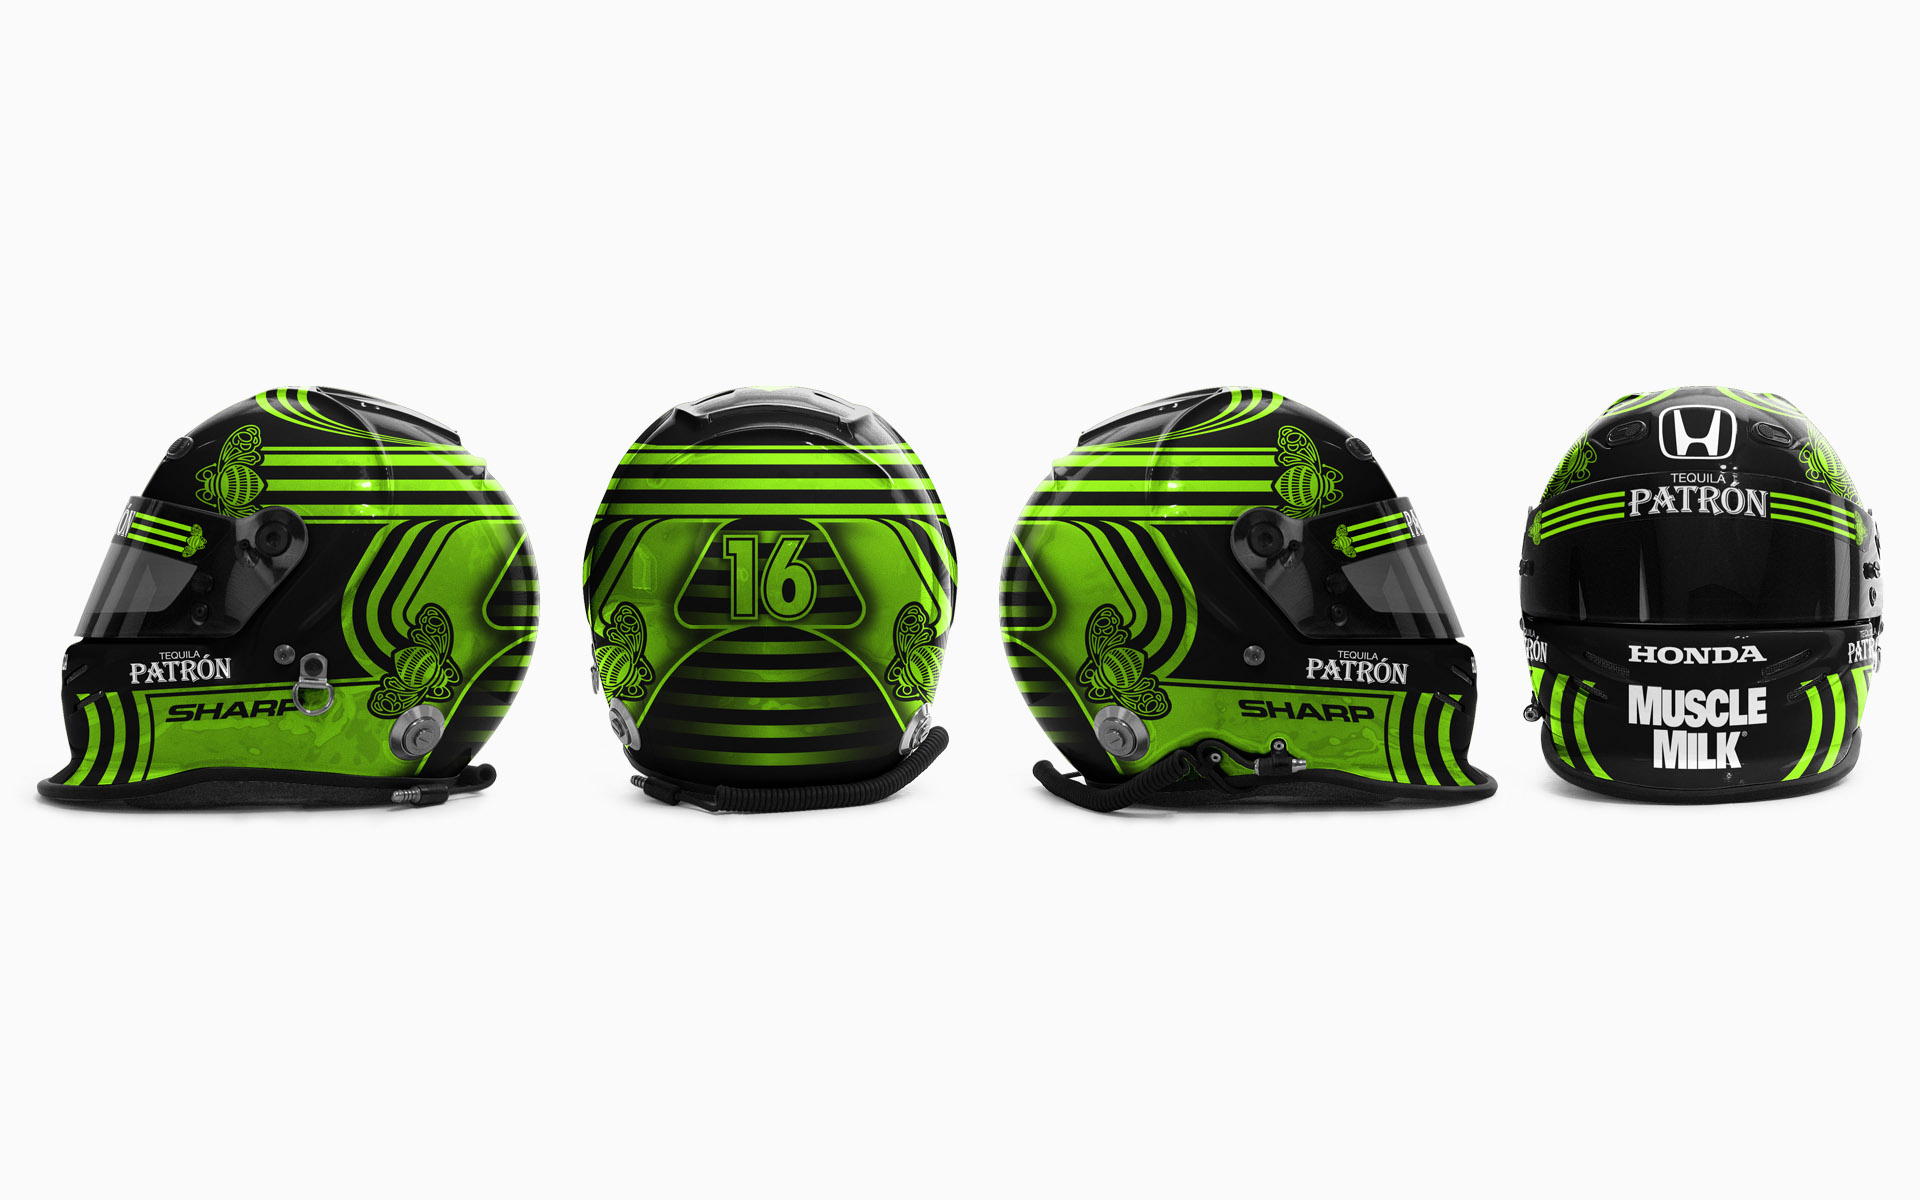 2009 Pátron Indy Racing Scott Sharp Helmet Livery Visualization